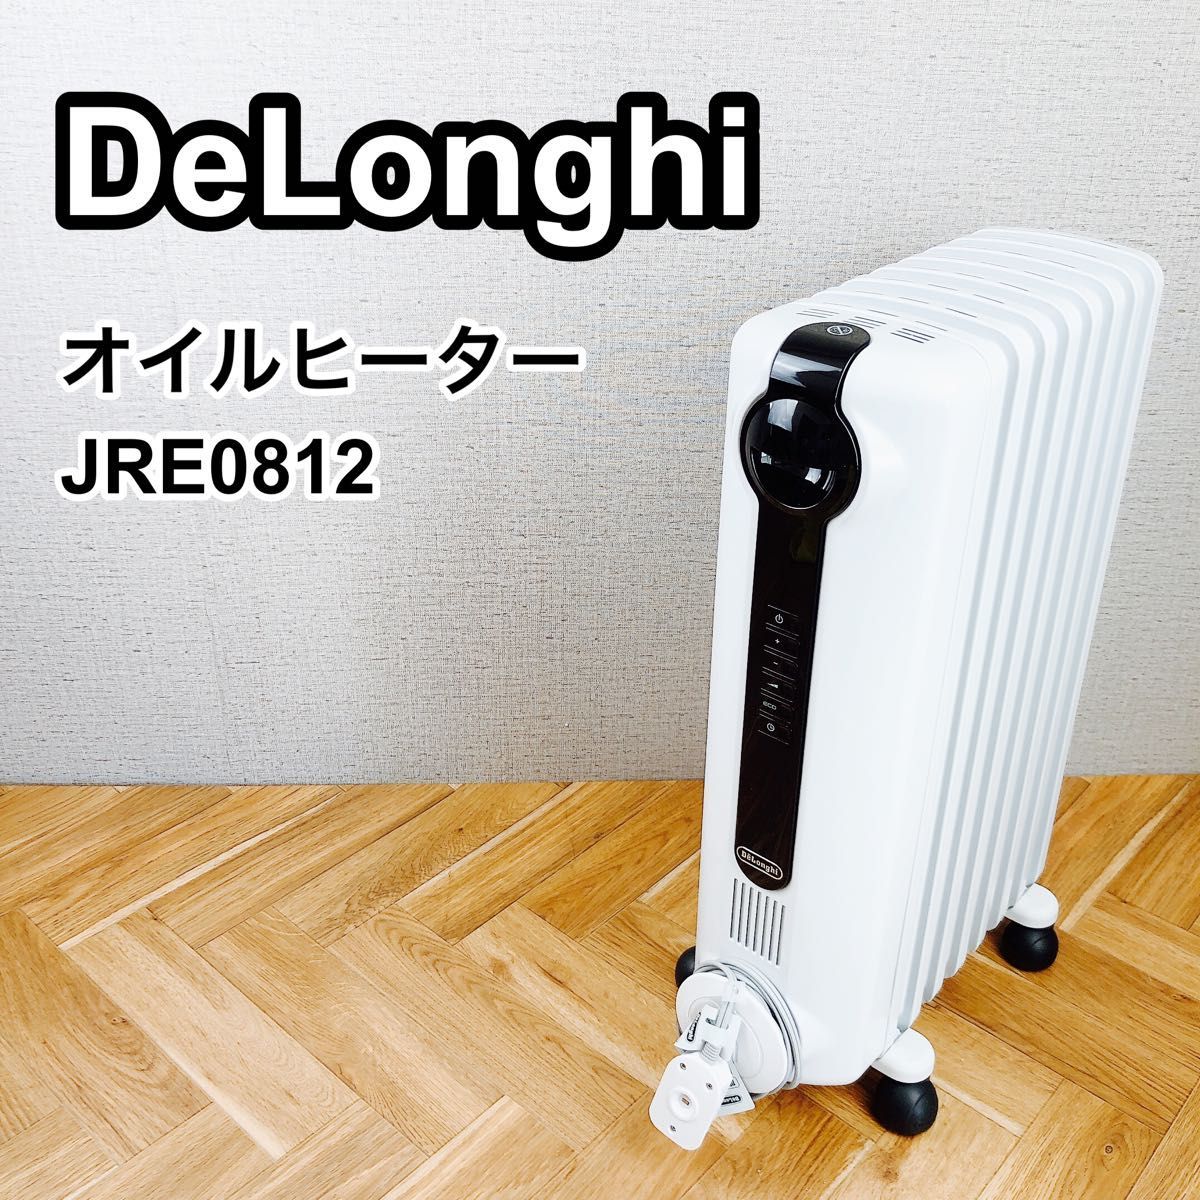 DeLonghi デロンギオイルヒーター JRE0812